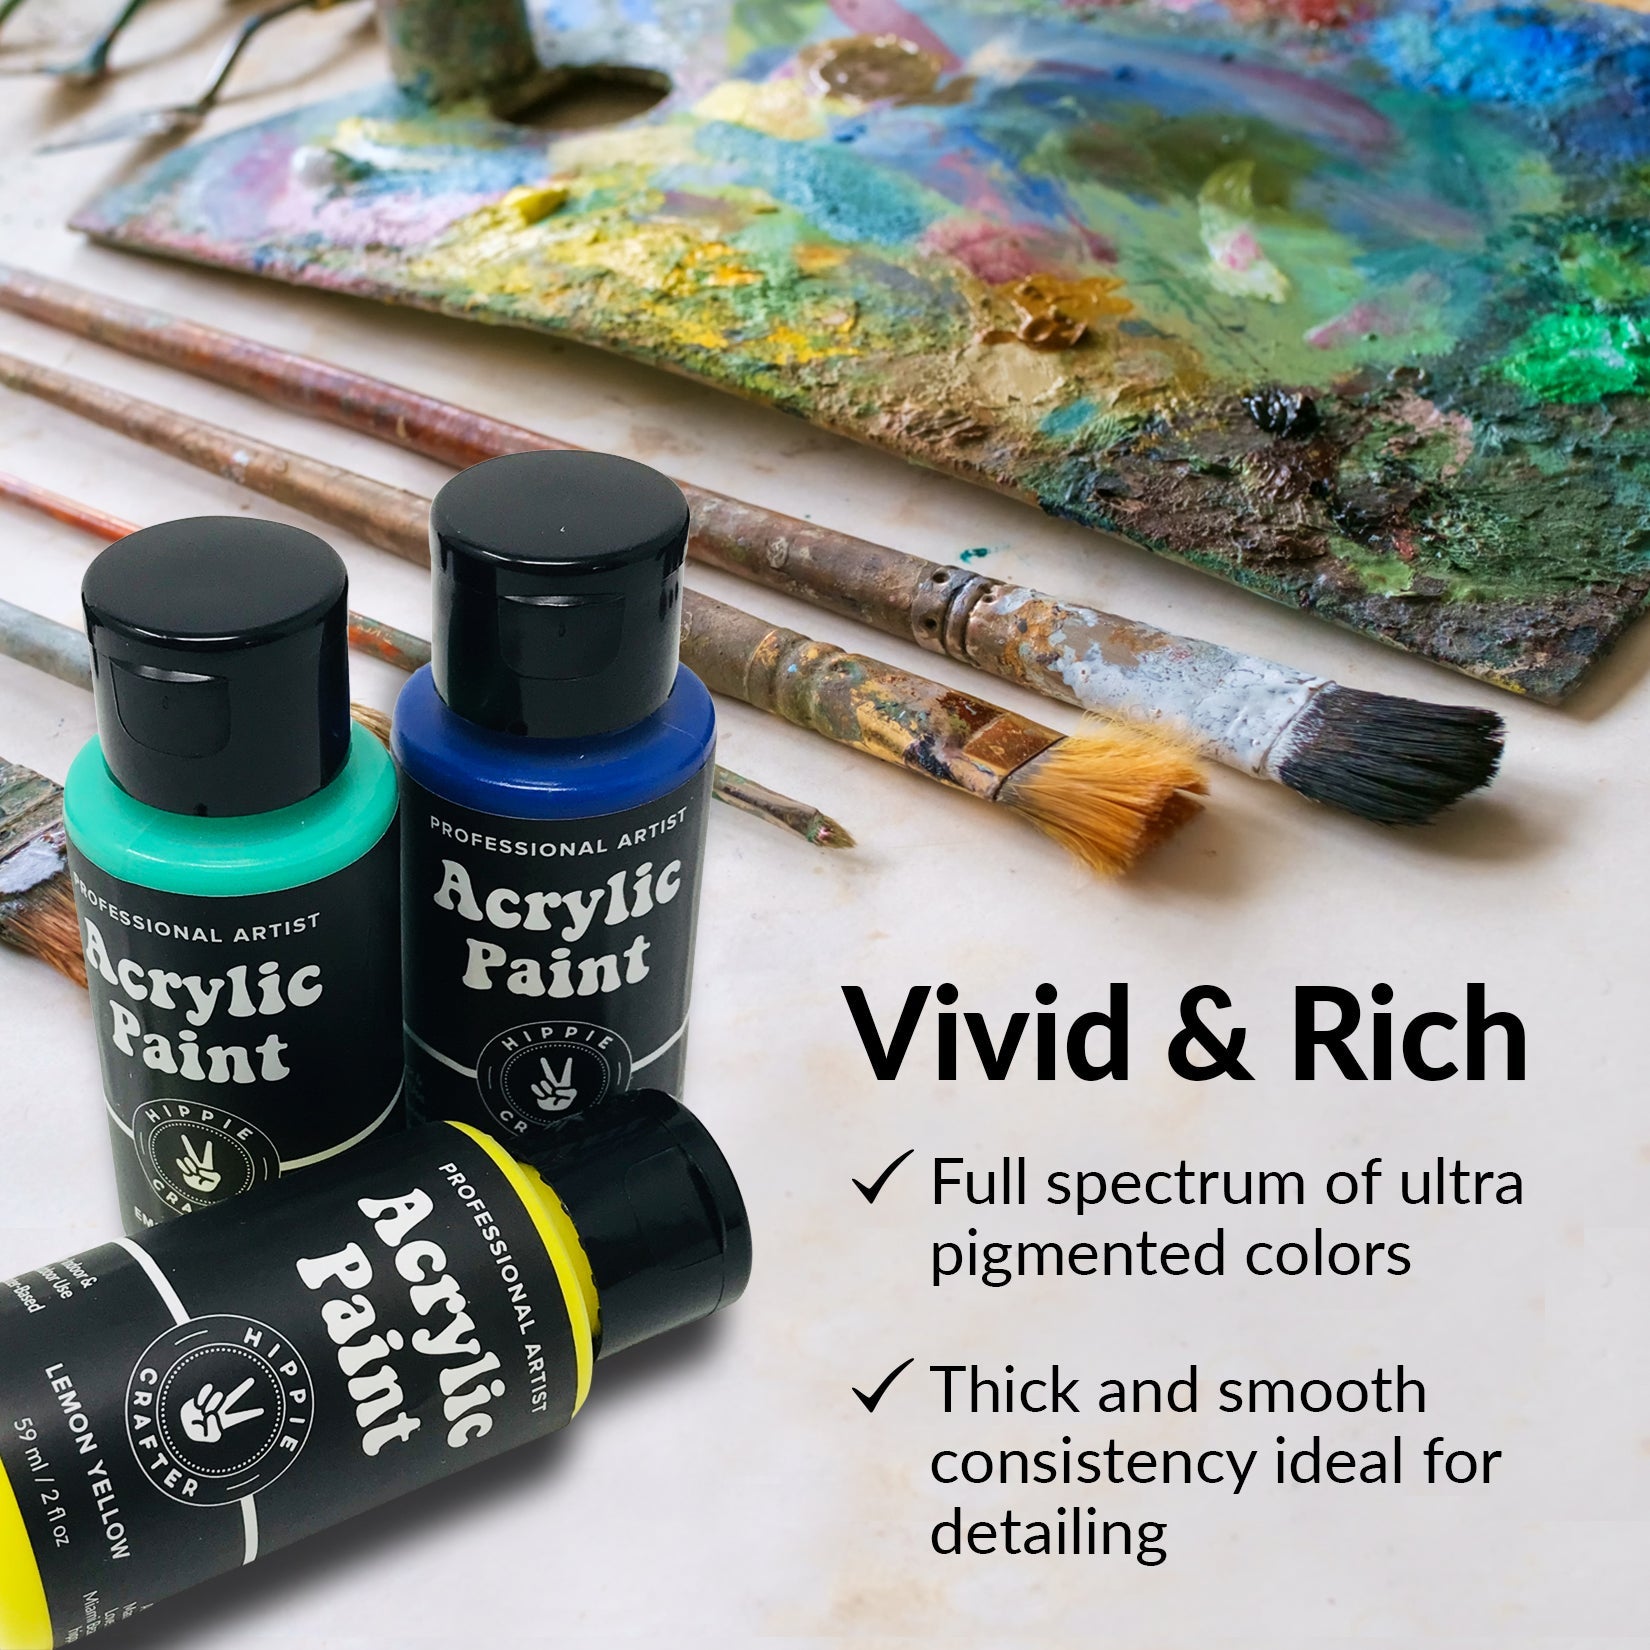 Gift Idea DIY Paint Kit, Paint Your Own Canvas Acrylic Paint Set, Paint  Party Kit, Boho Painting Kit DIY Craft Kit for Adults 